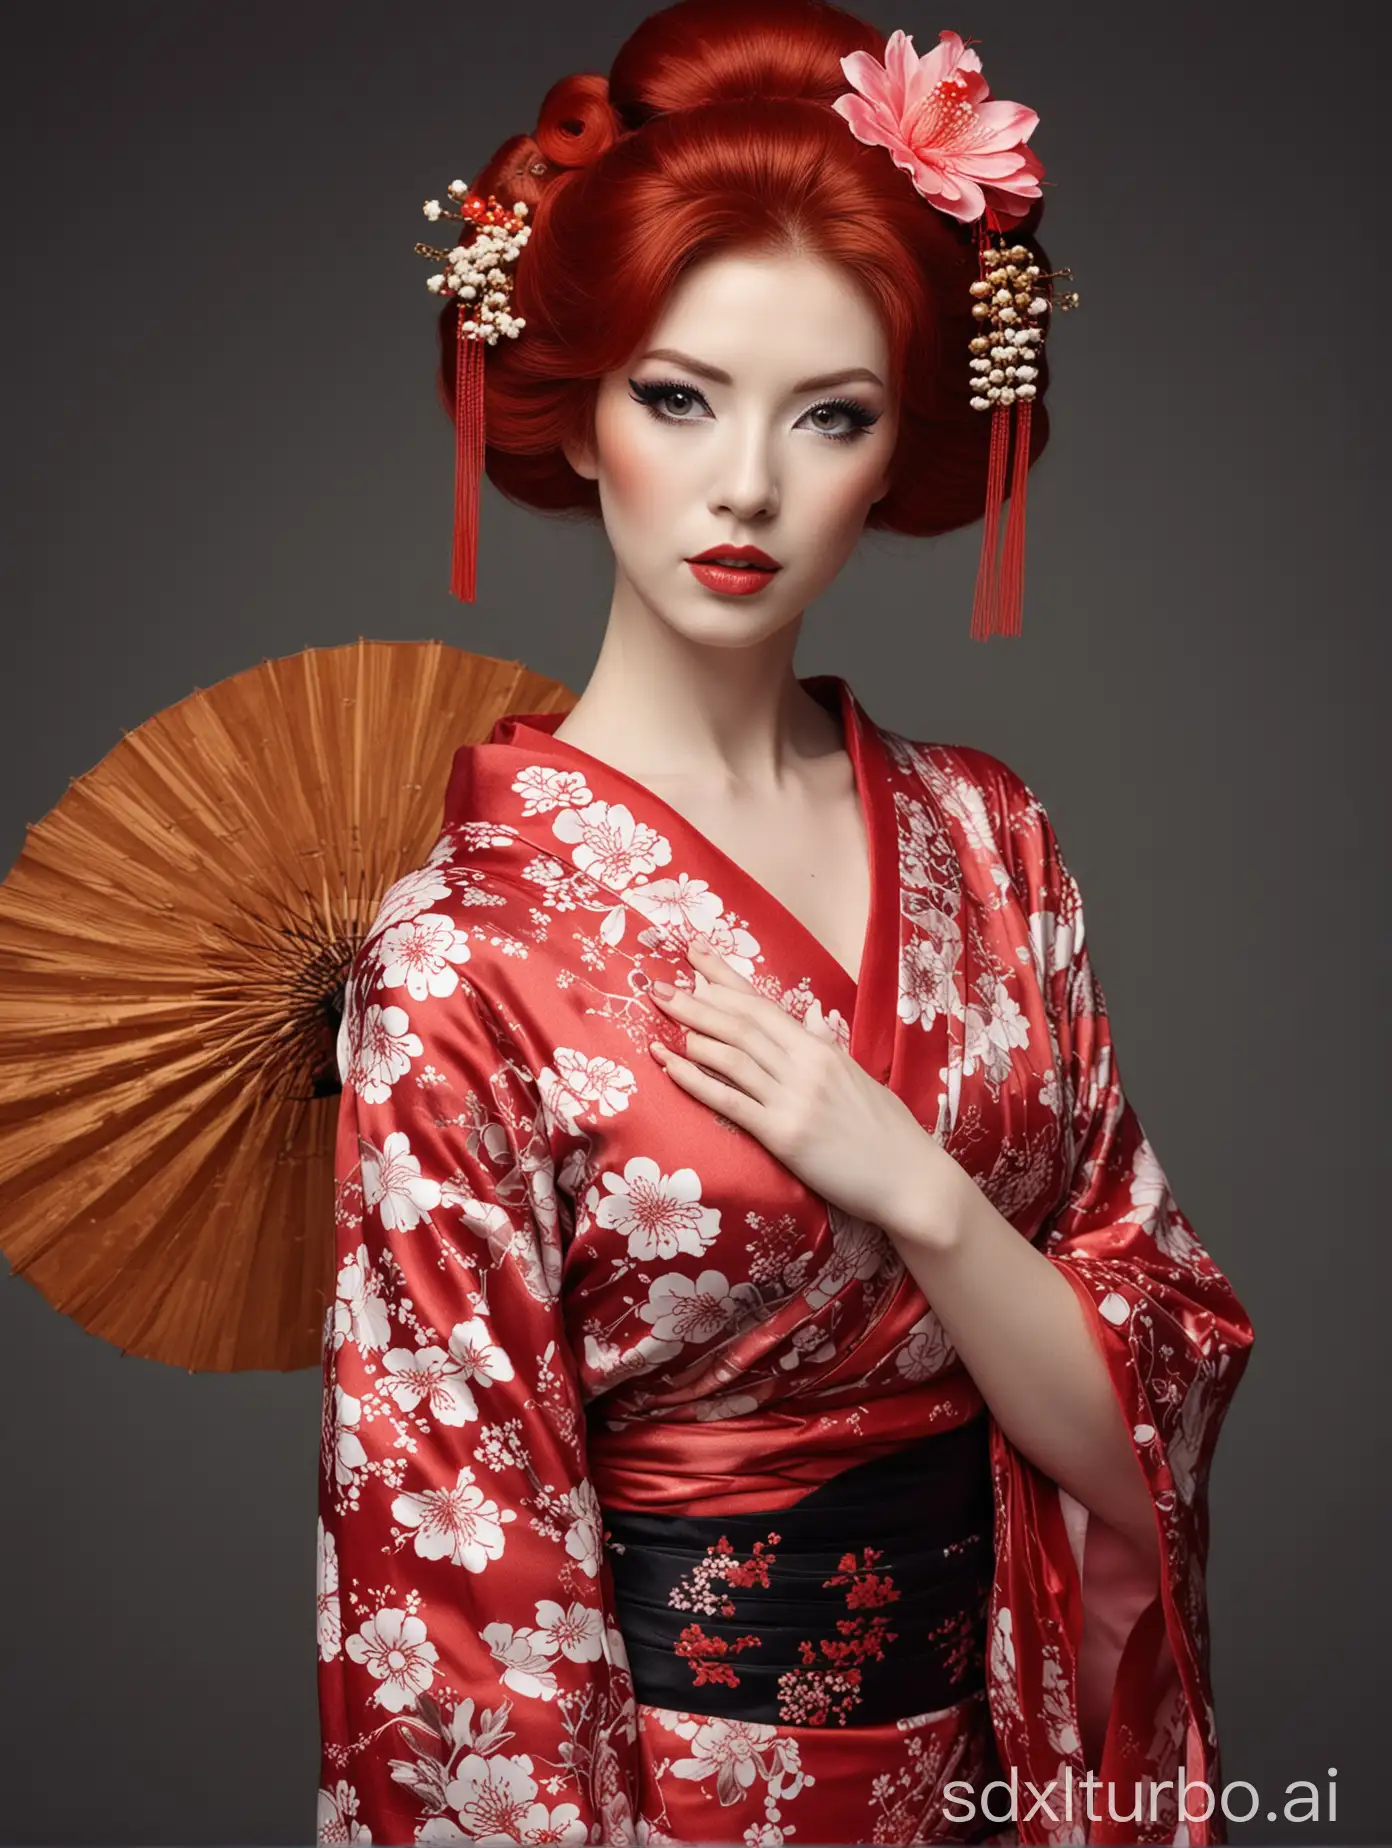 redhead sexy woman dressed as geisha